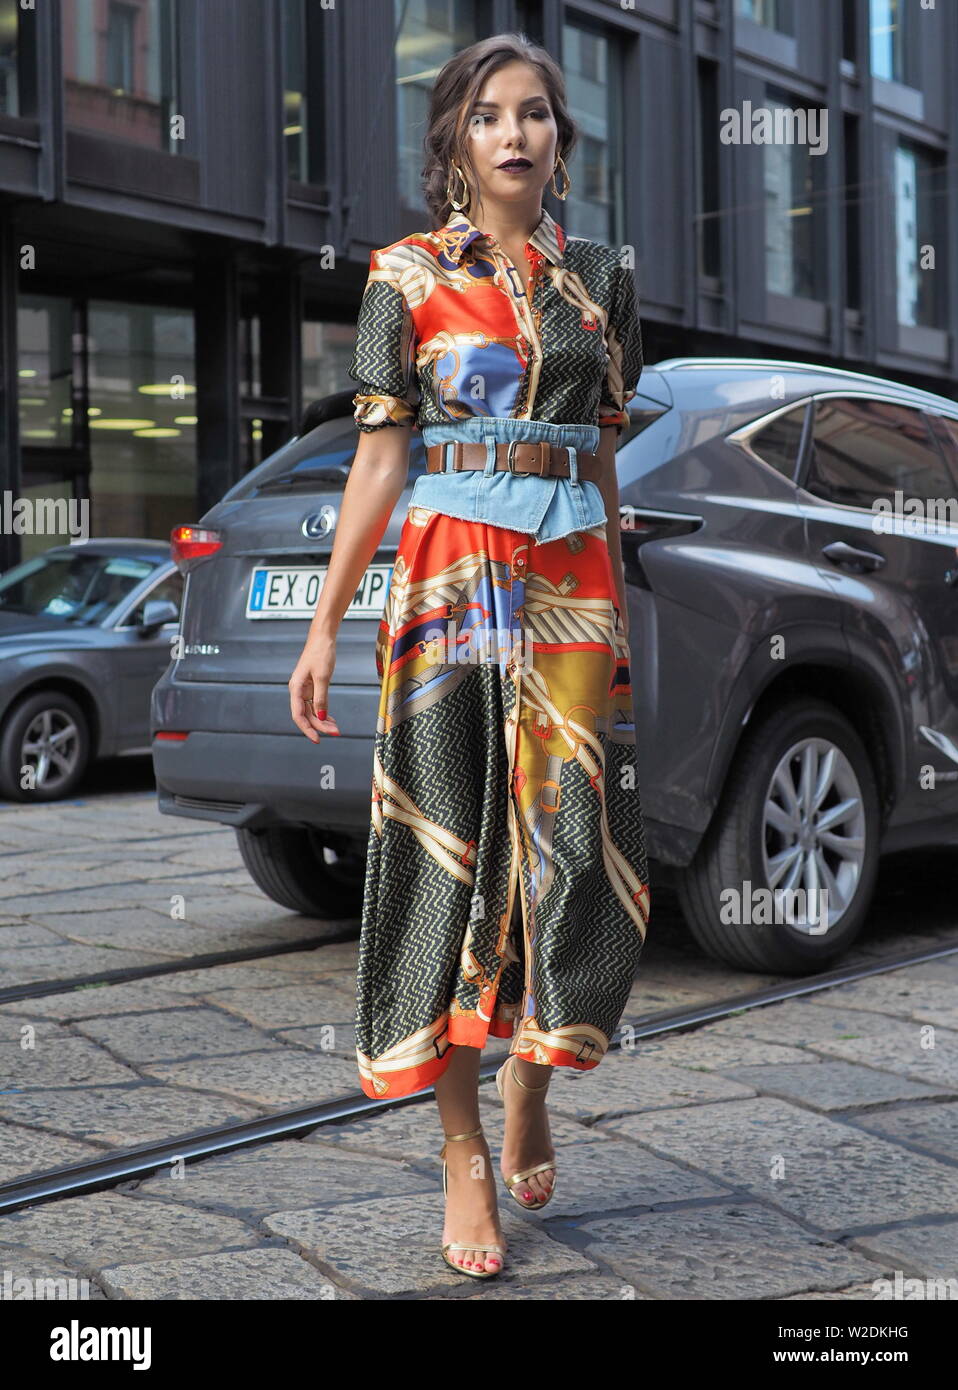 MILANO, Italy: 19 September 2018: Fashionable woman street style